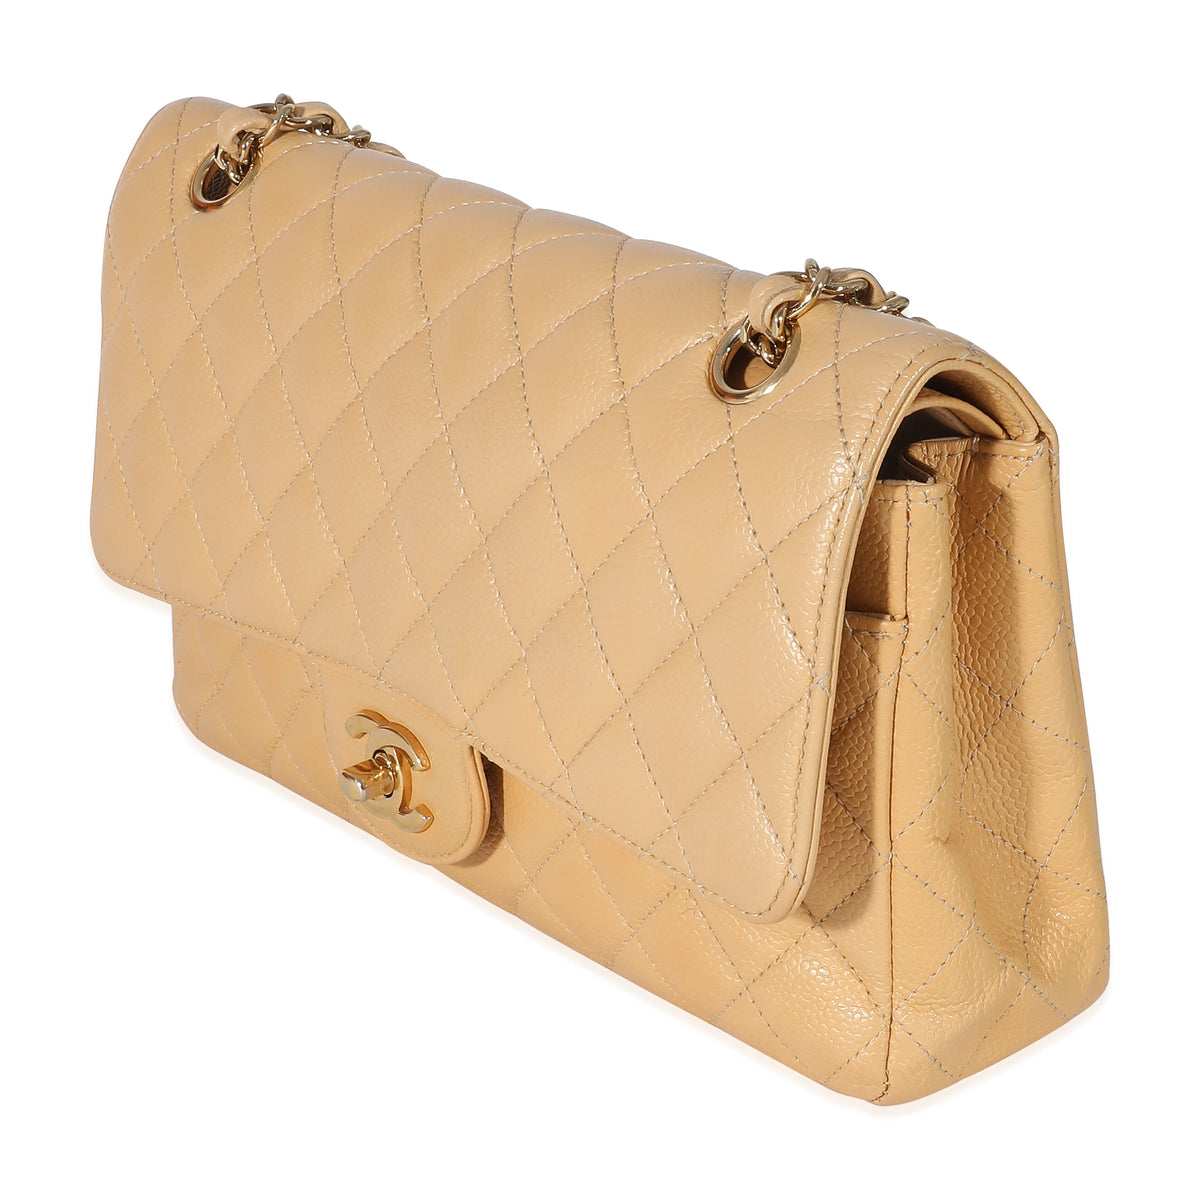 Chanel Medium Classic Double Flap Bag Beige Lambskin Light Gold Hardware